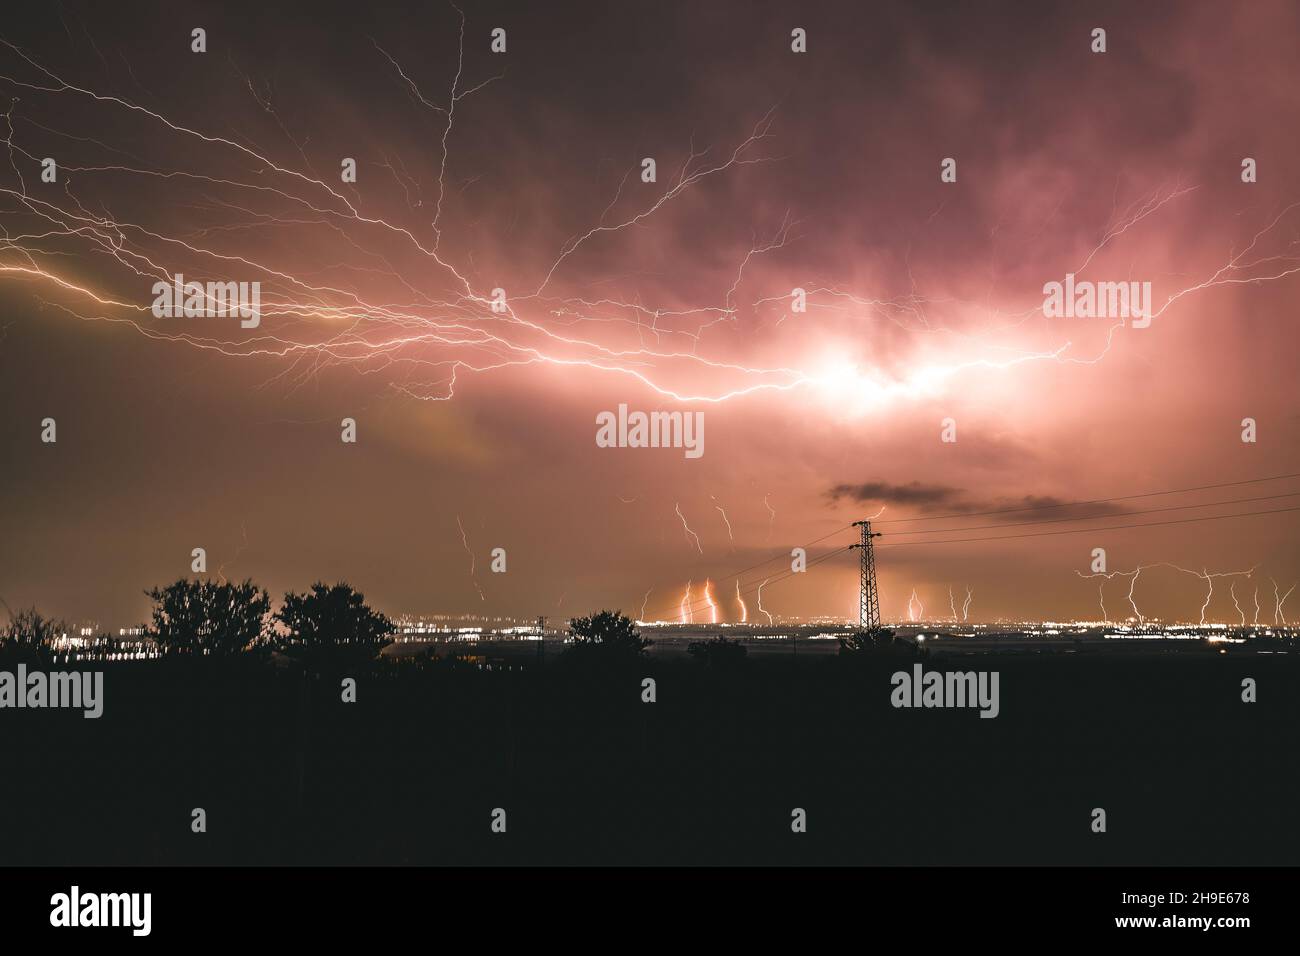 Lightning bolt florida hi-res stock photography and images - Alamy